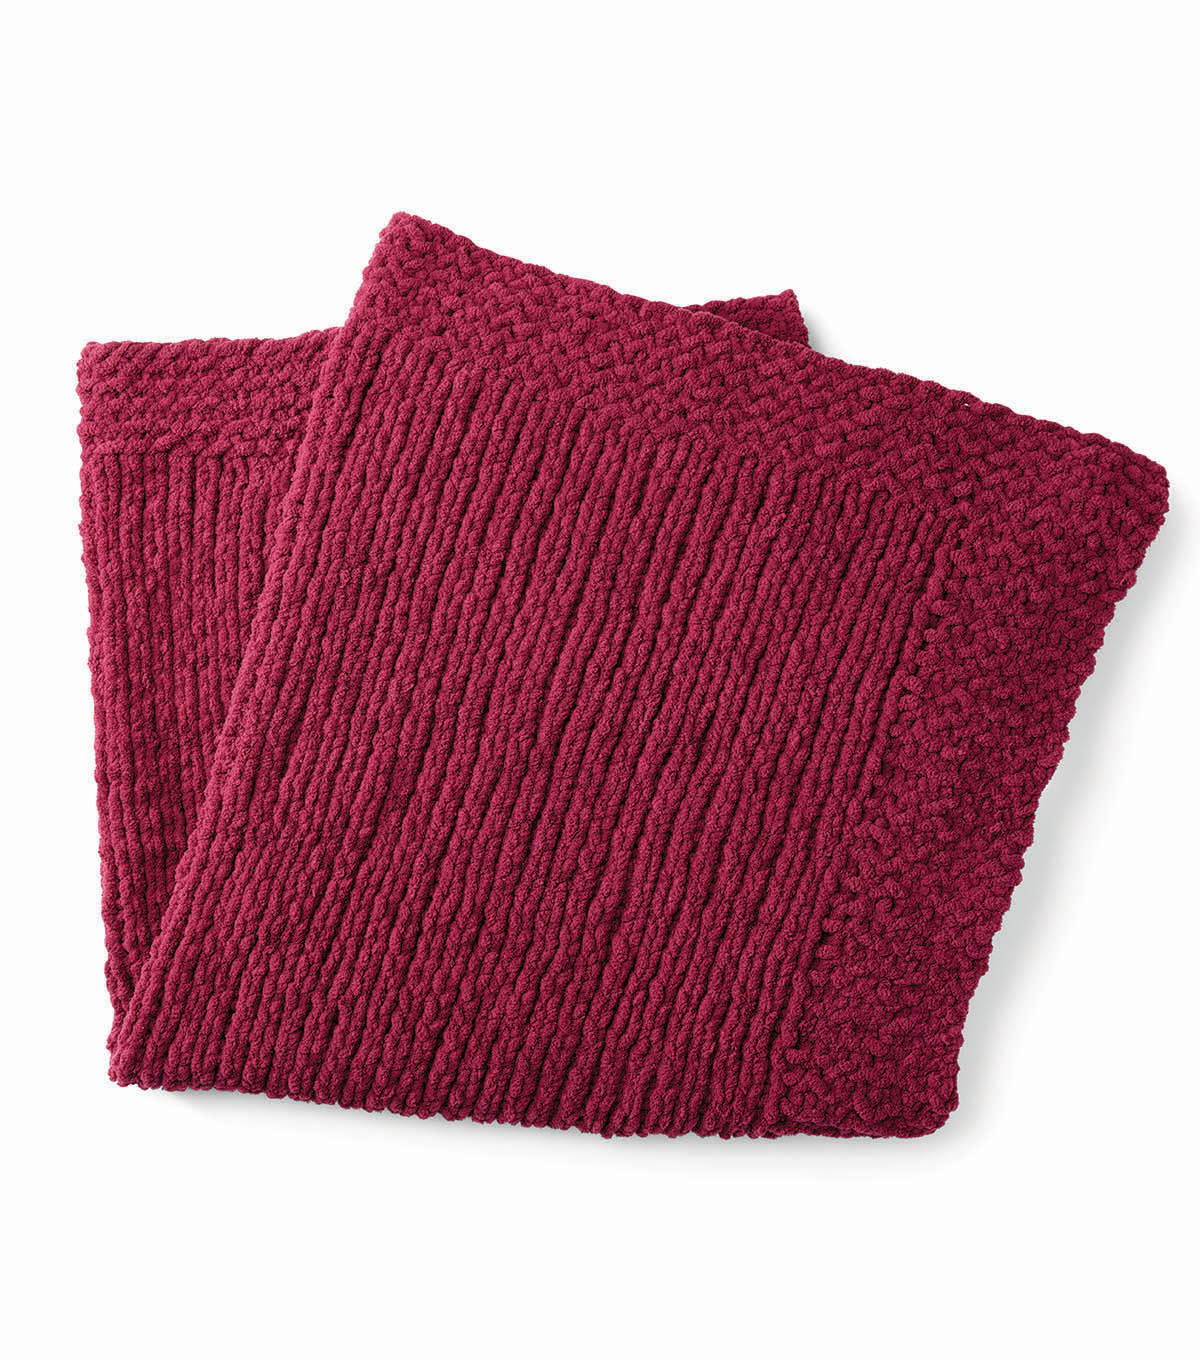 How To Make Bernat Blanket Extra Simple Stitch Knit Afghan Online